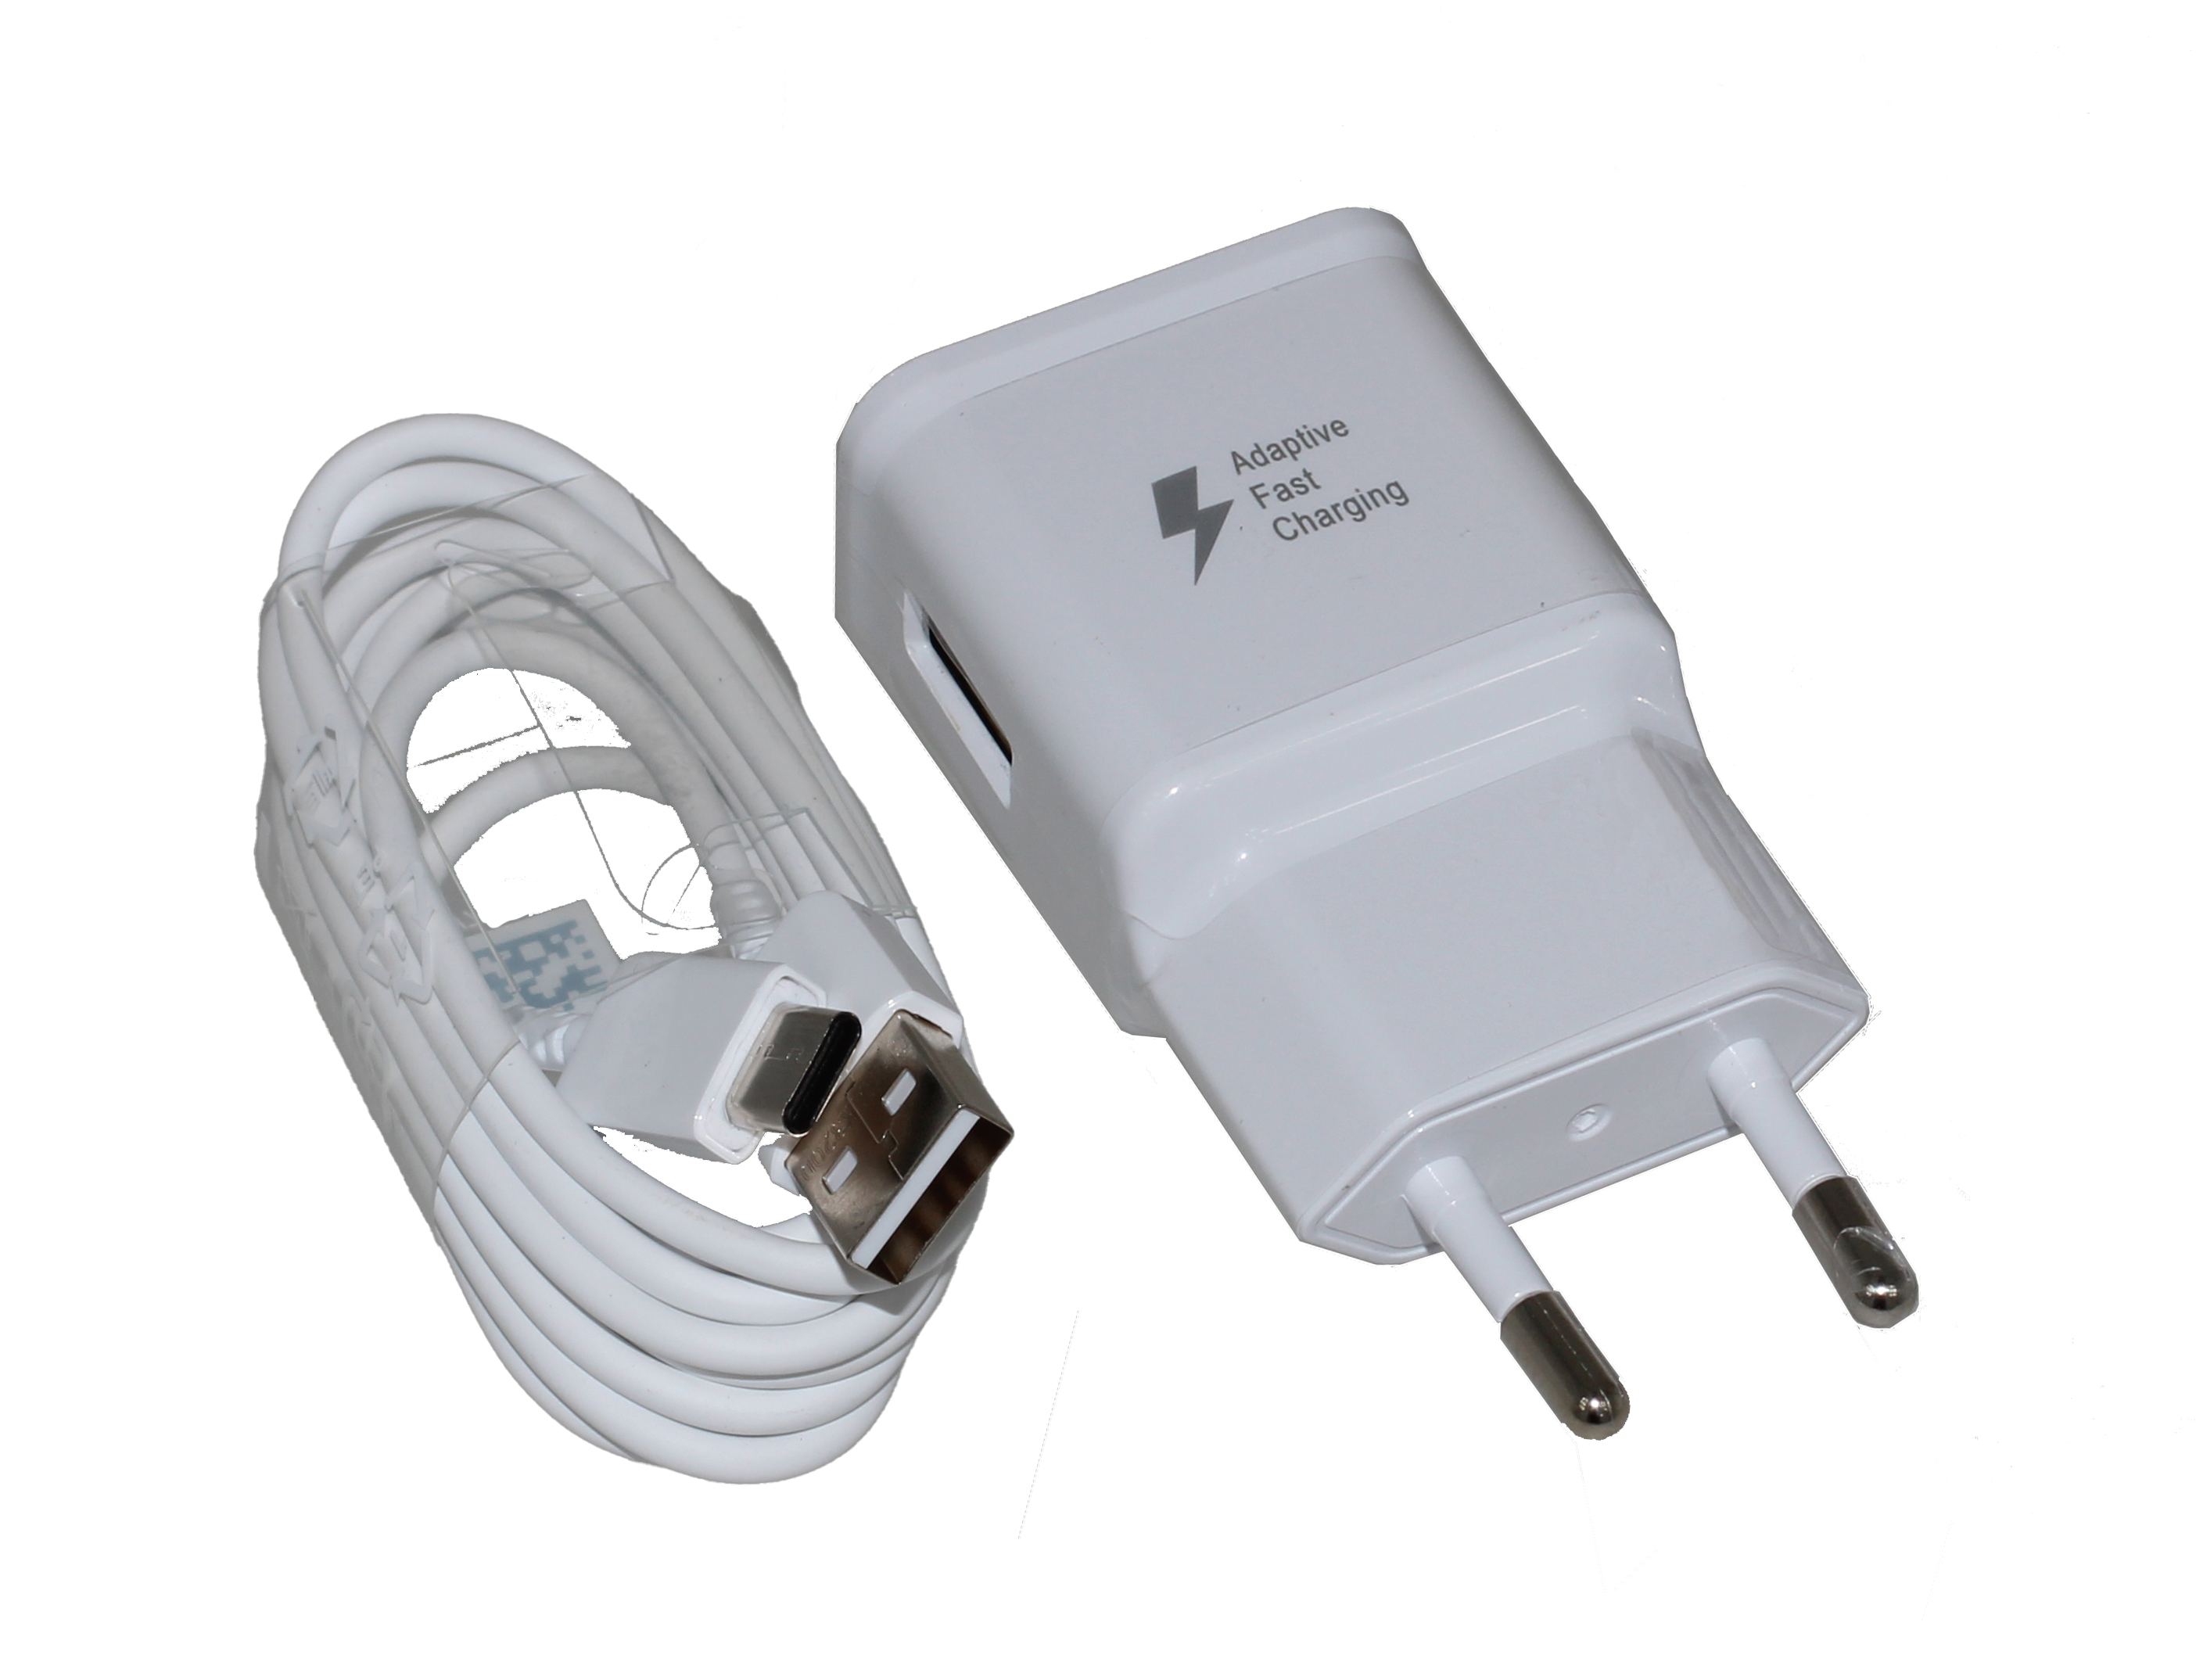 KFZ Ladekabel USB-C Auto-Adapter Ladegerät für Samsung Galaxy S21